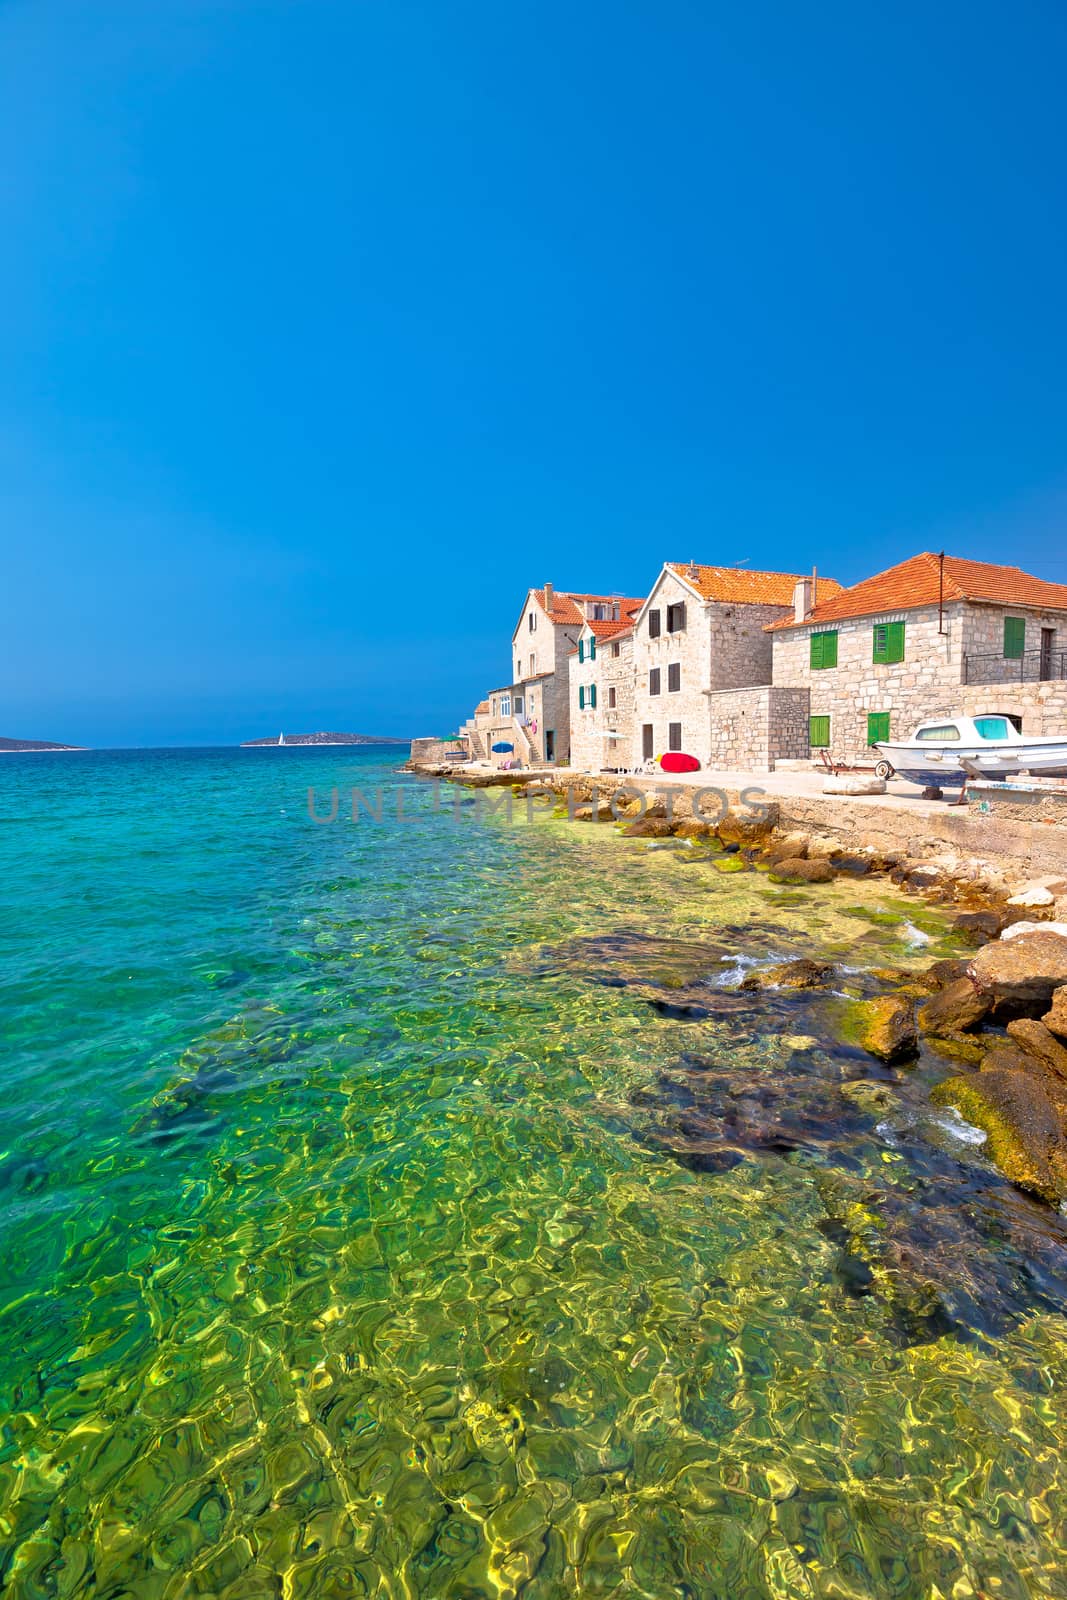 Turquoise beach and stone waterfront in Prvic Sepurine, Sibenik archipelago of Dalmatia, Croatia